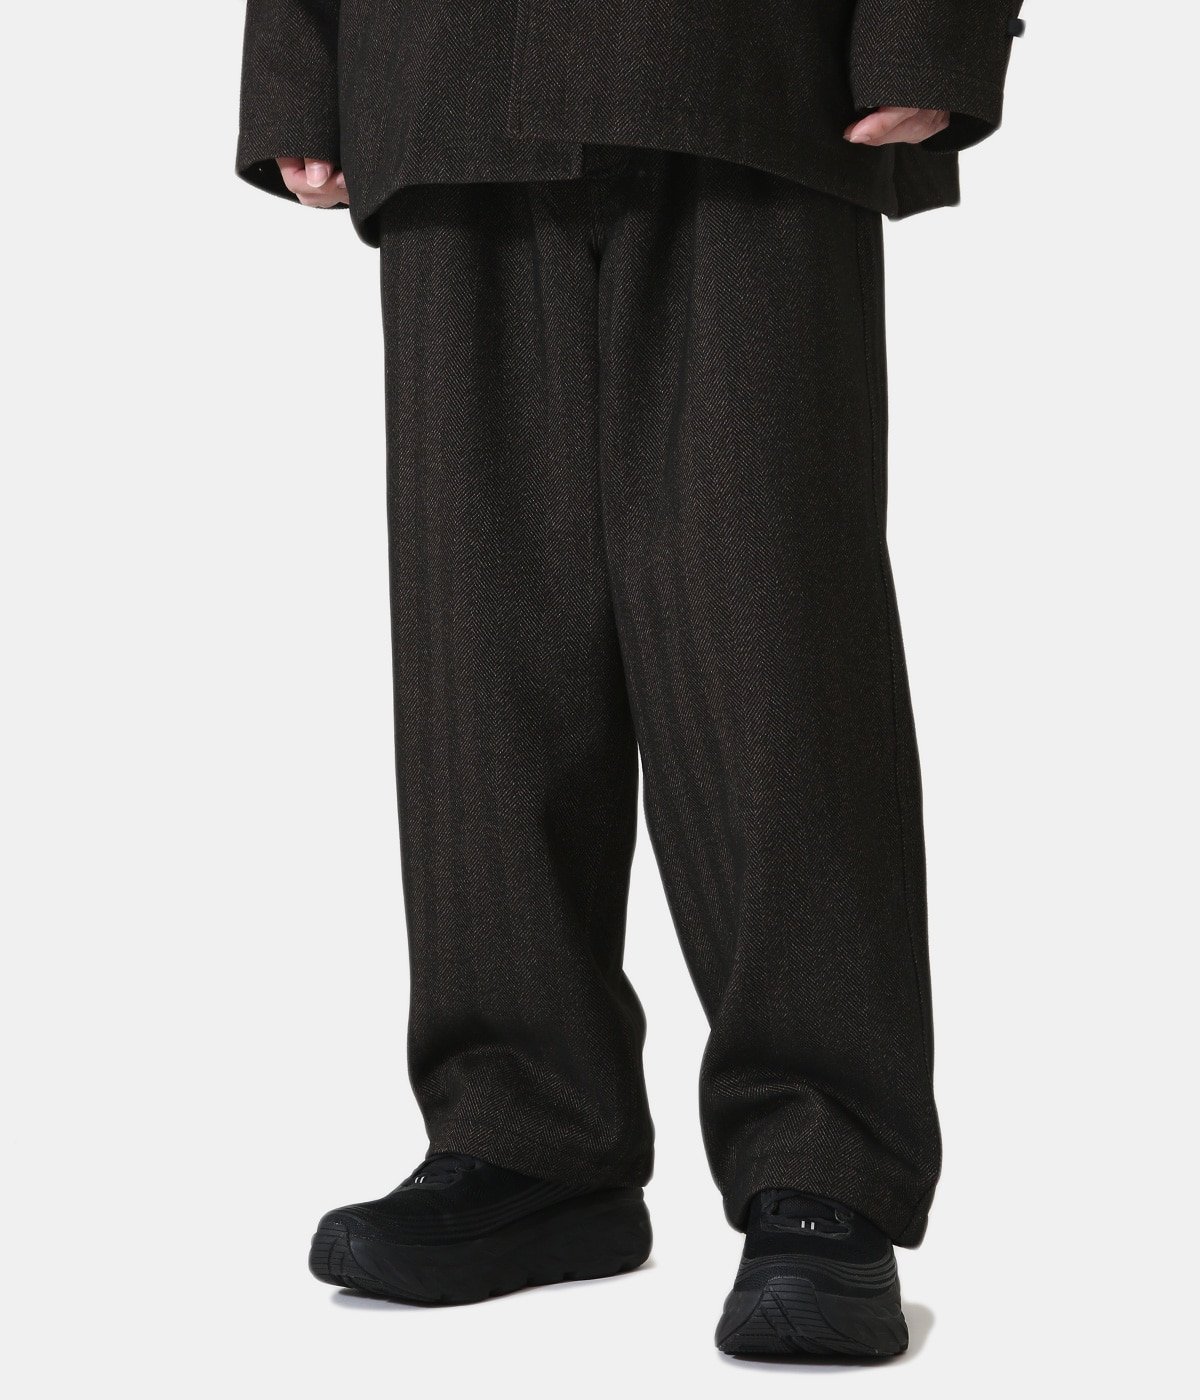 tech tweed easy trousers